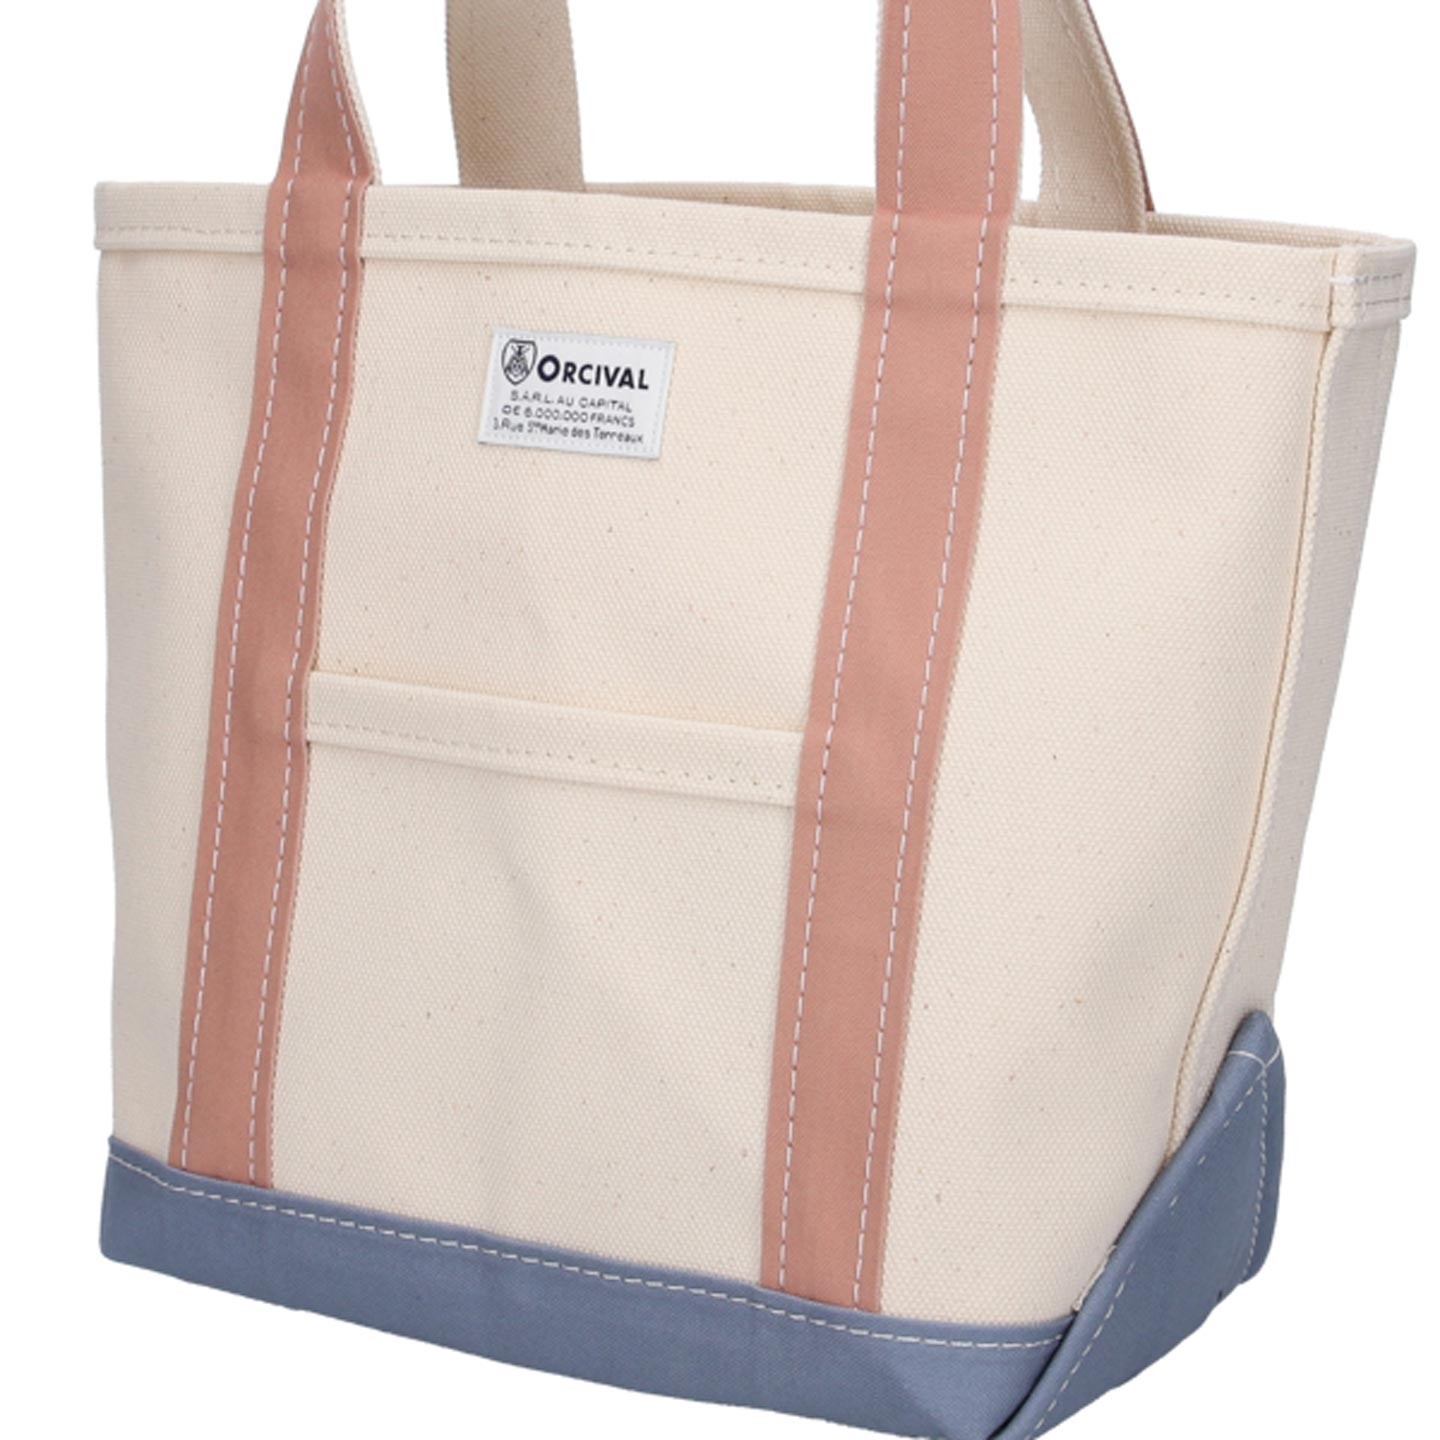 Ecru / Smocky Pink / Greyish Blue Canvas Tote Bag medium